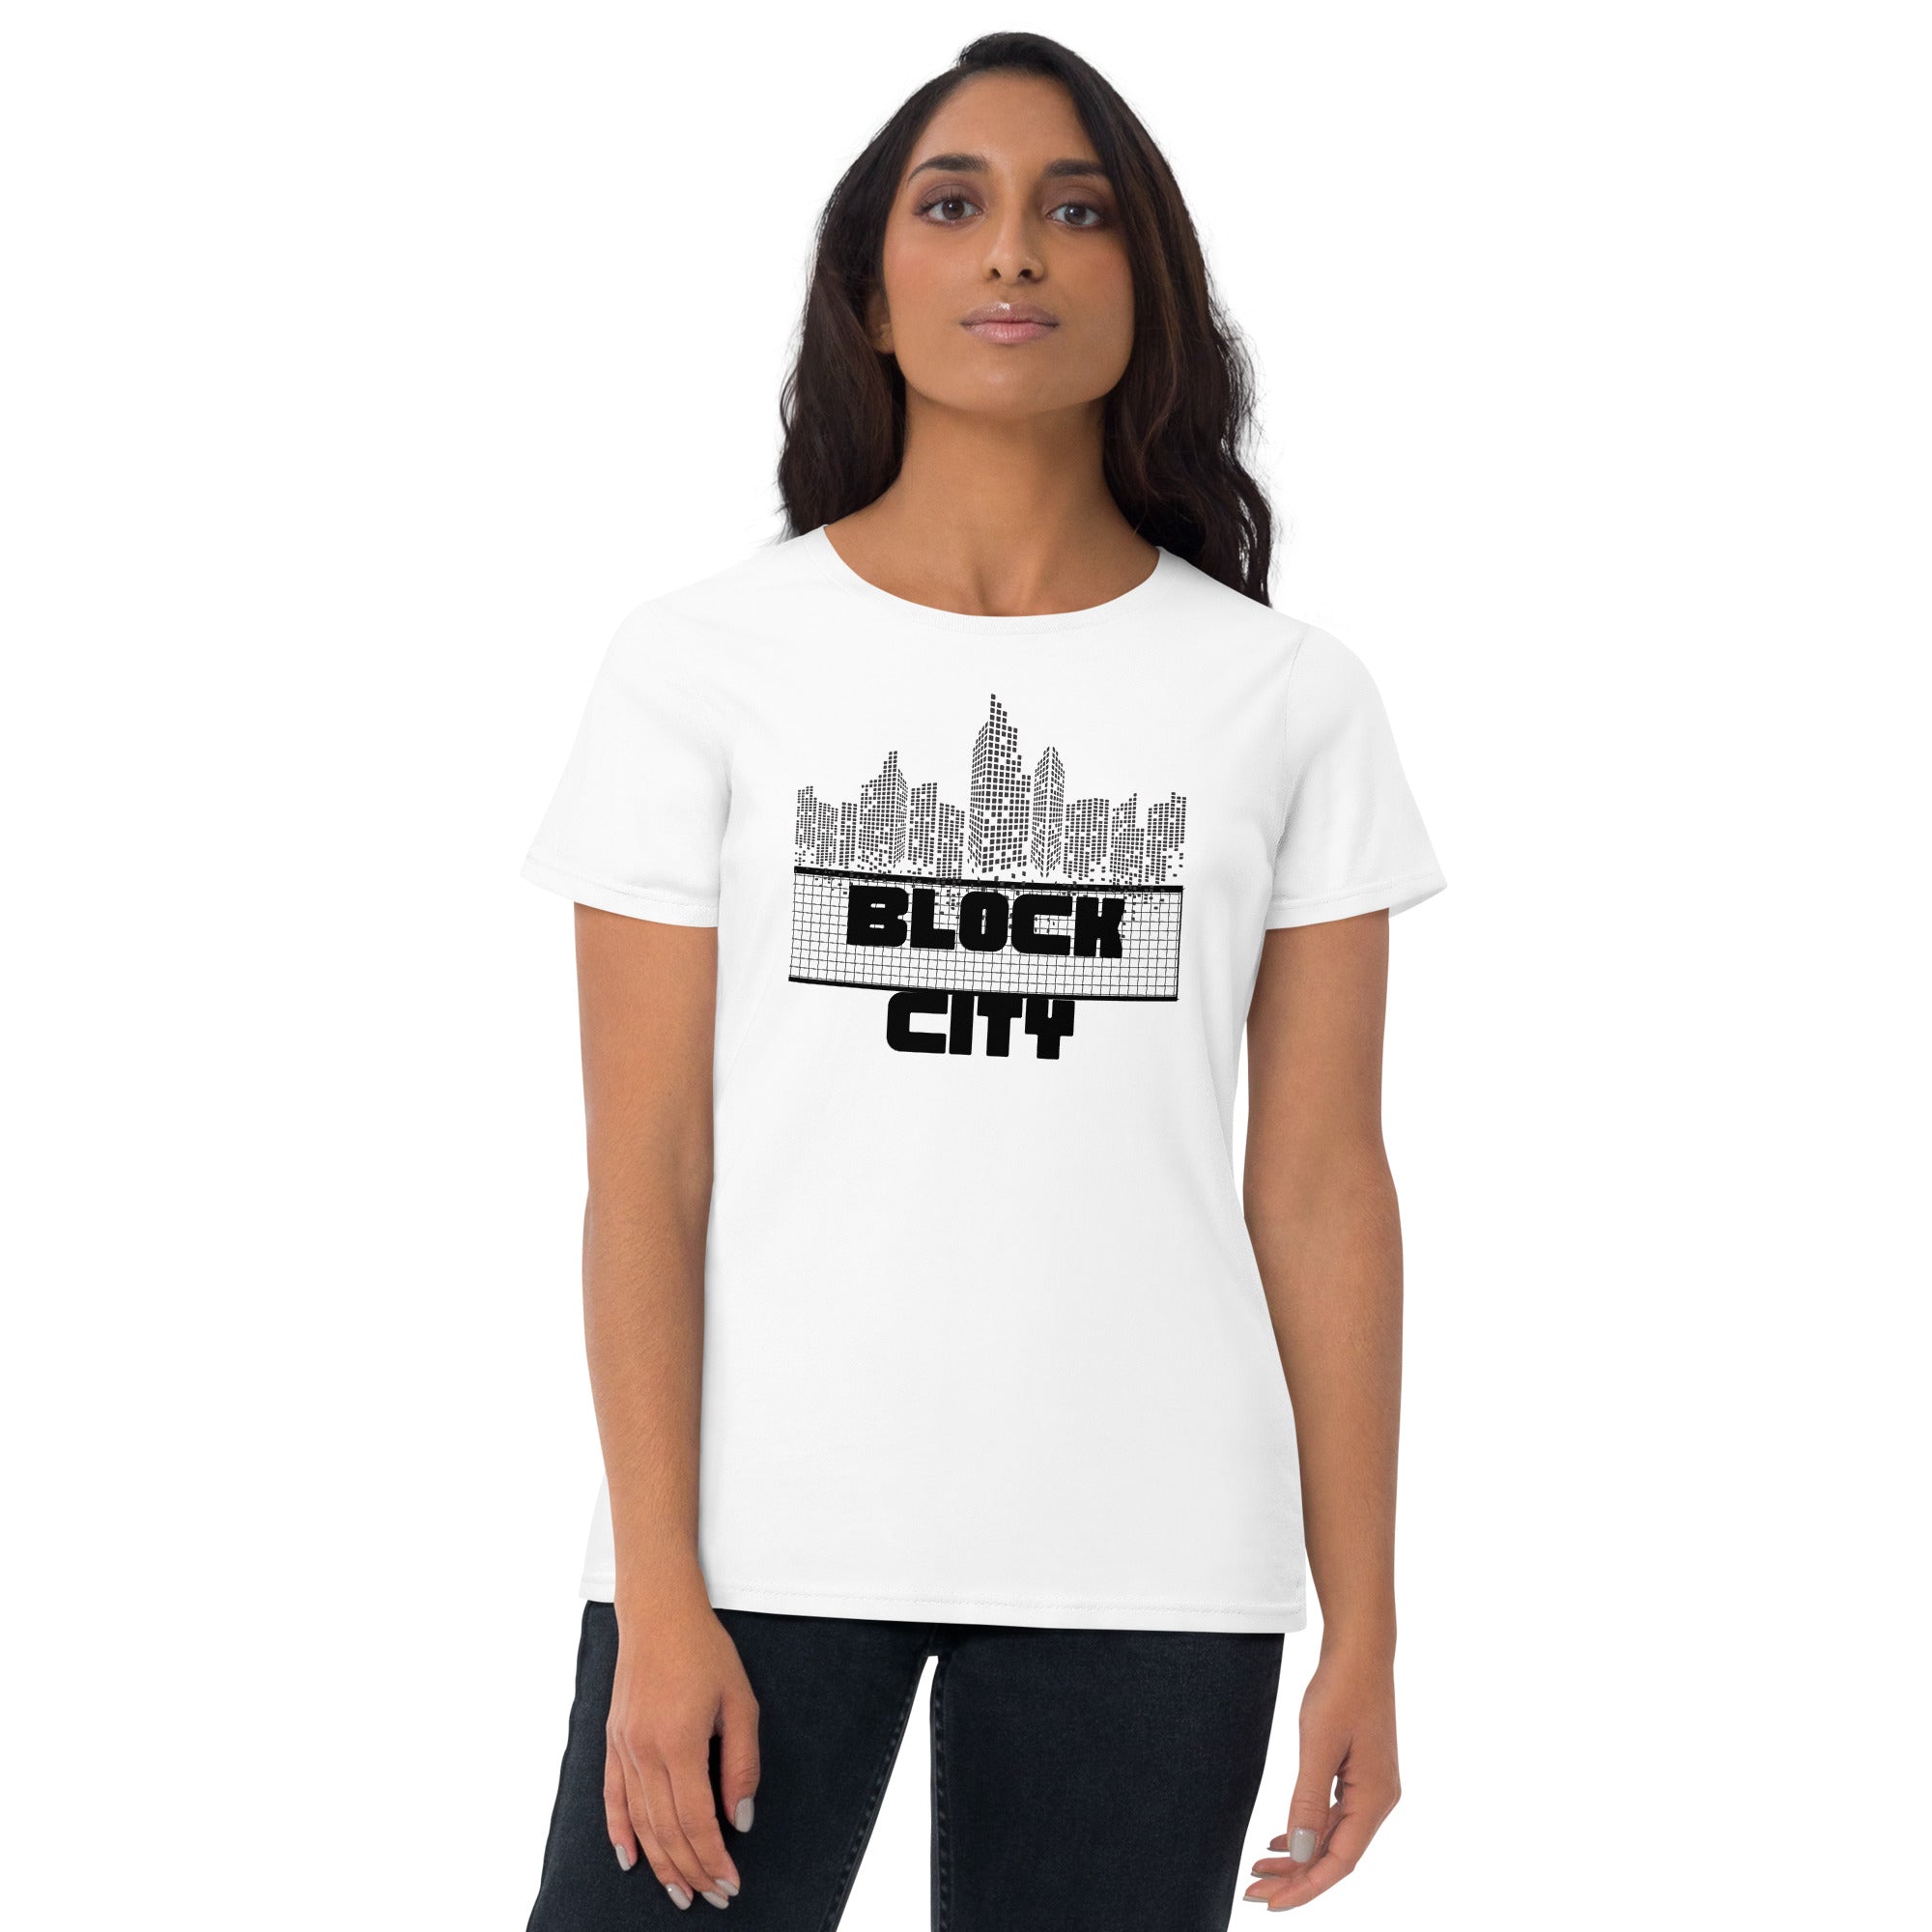 Block City Women's Fitted T-Shirt